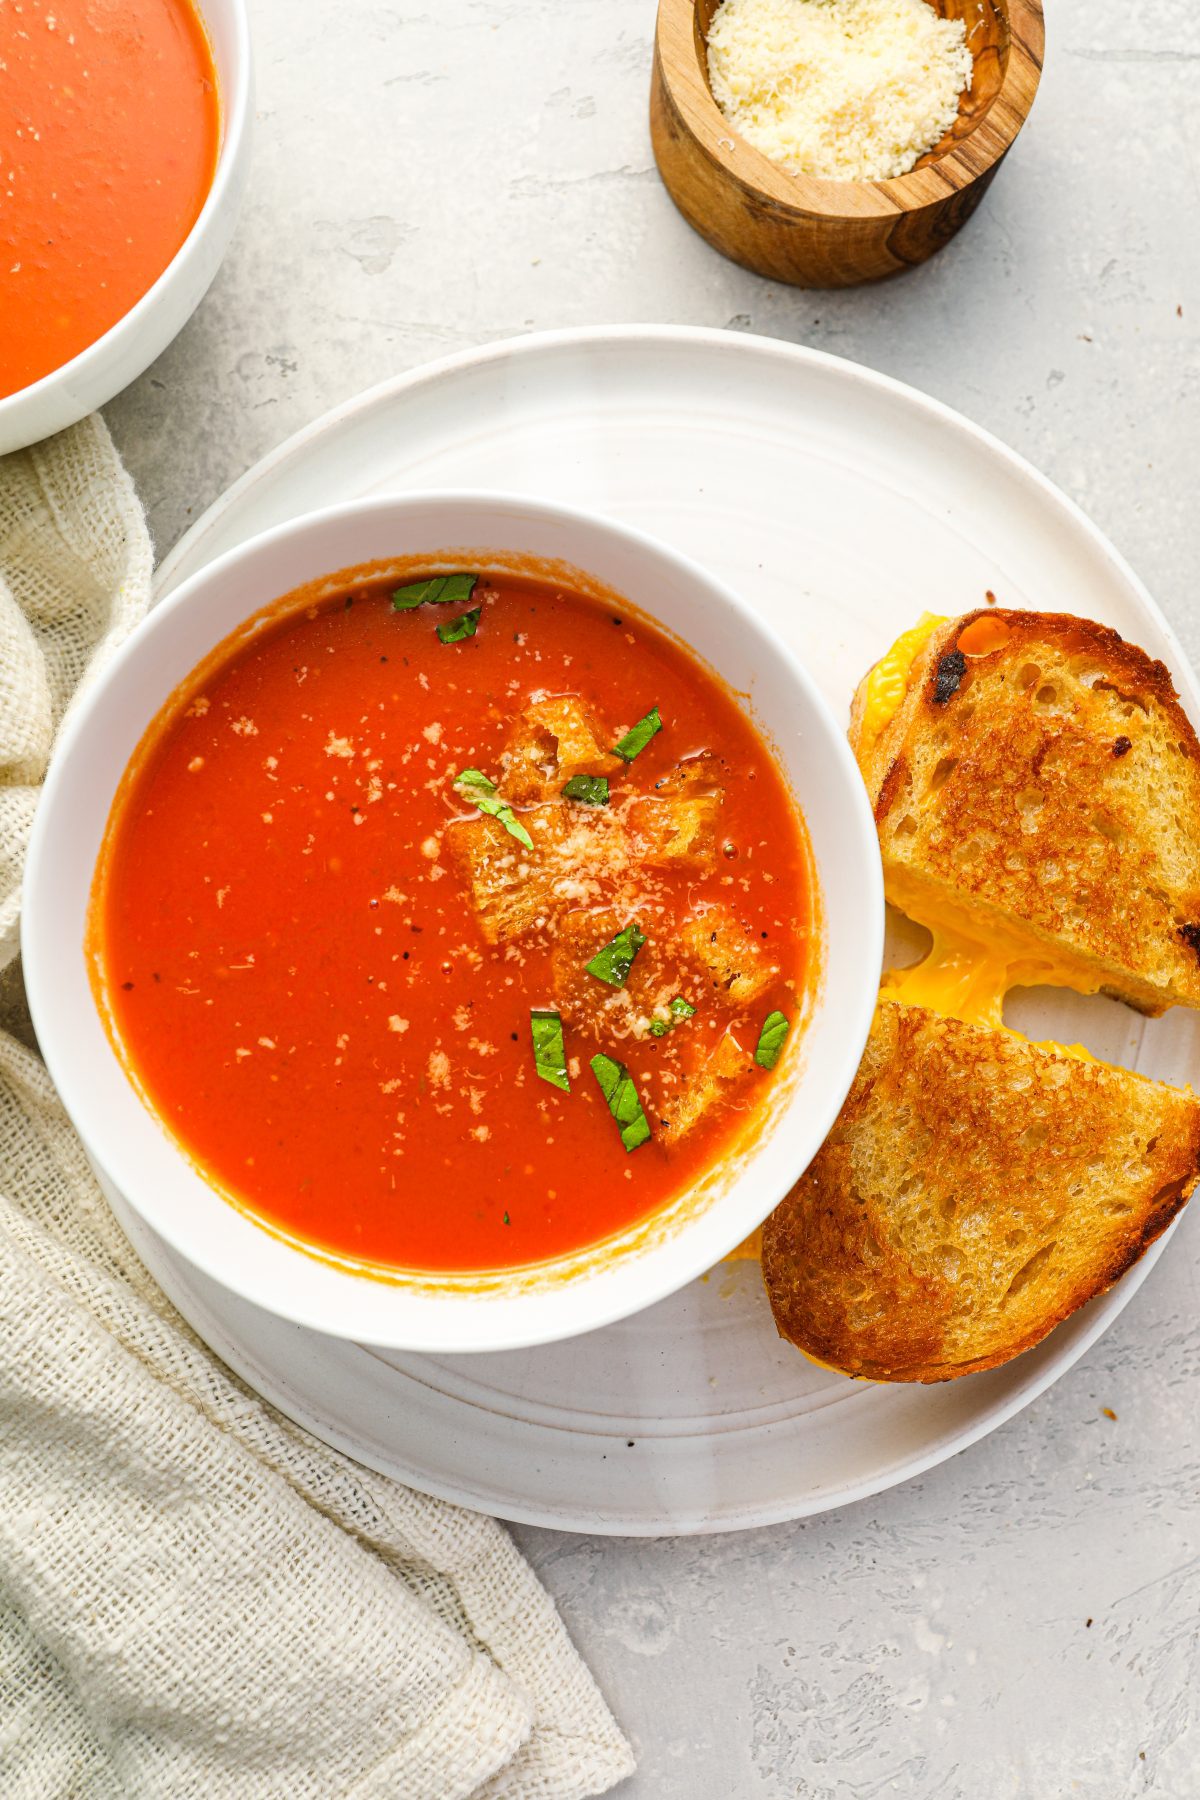 https://www.onceuponachef.com/images/2021/02/Tomato-Soup-3-1200x1800.jpg